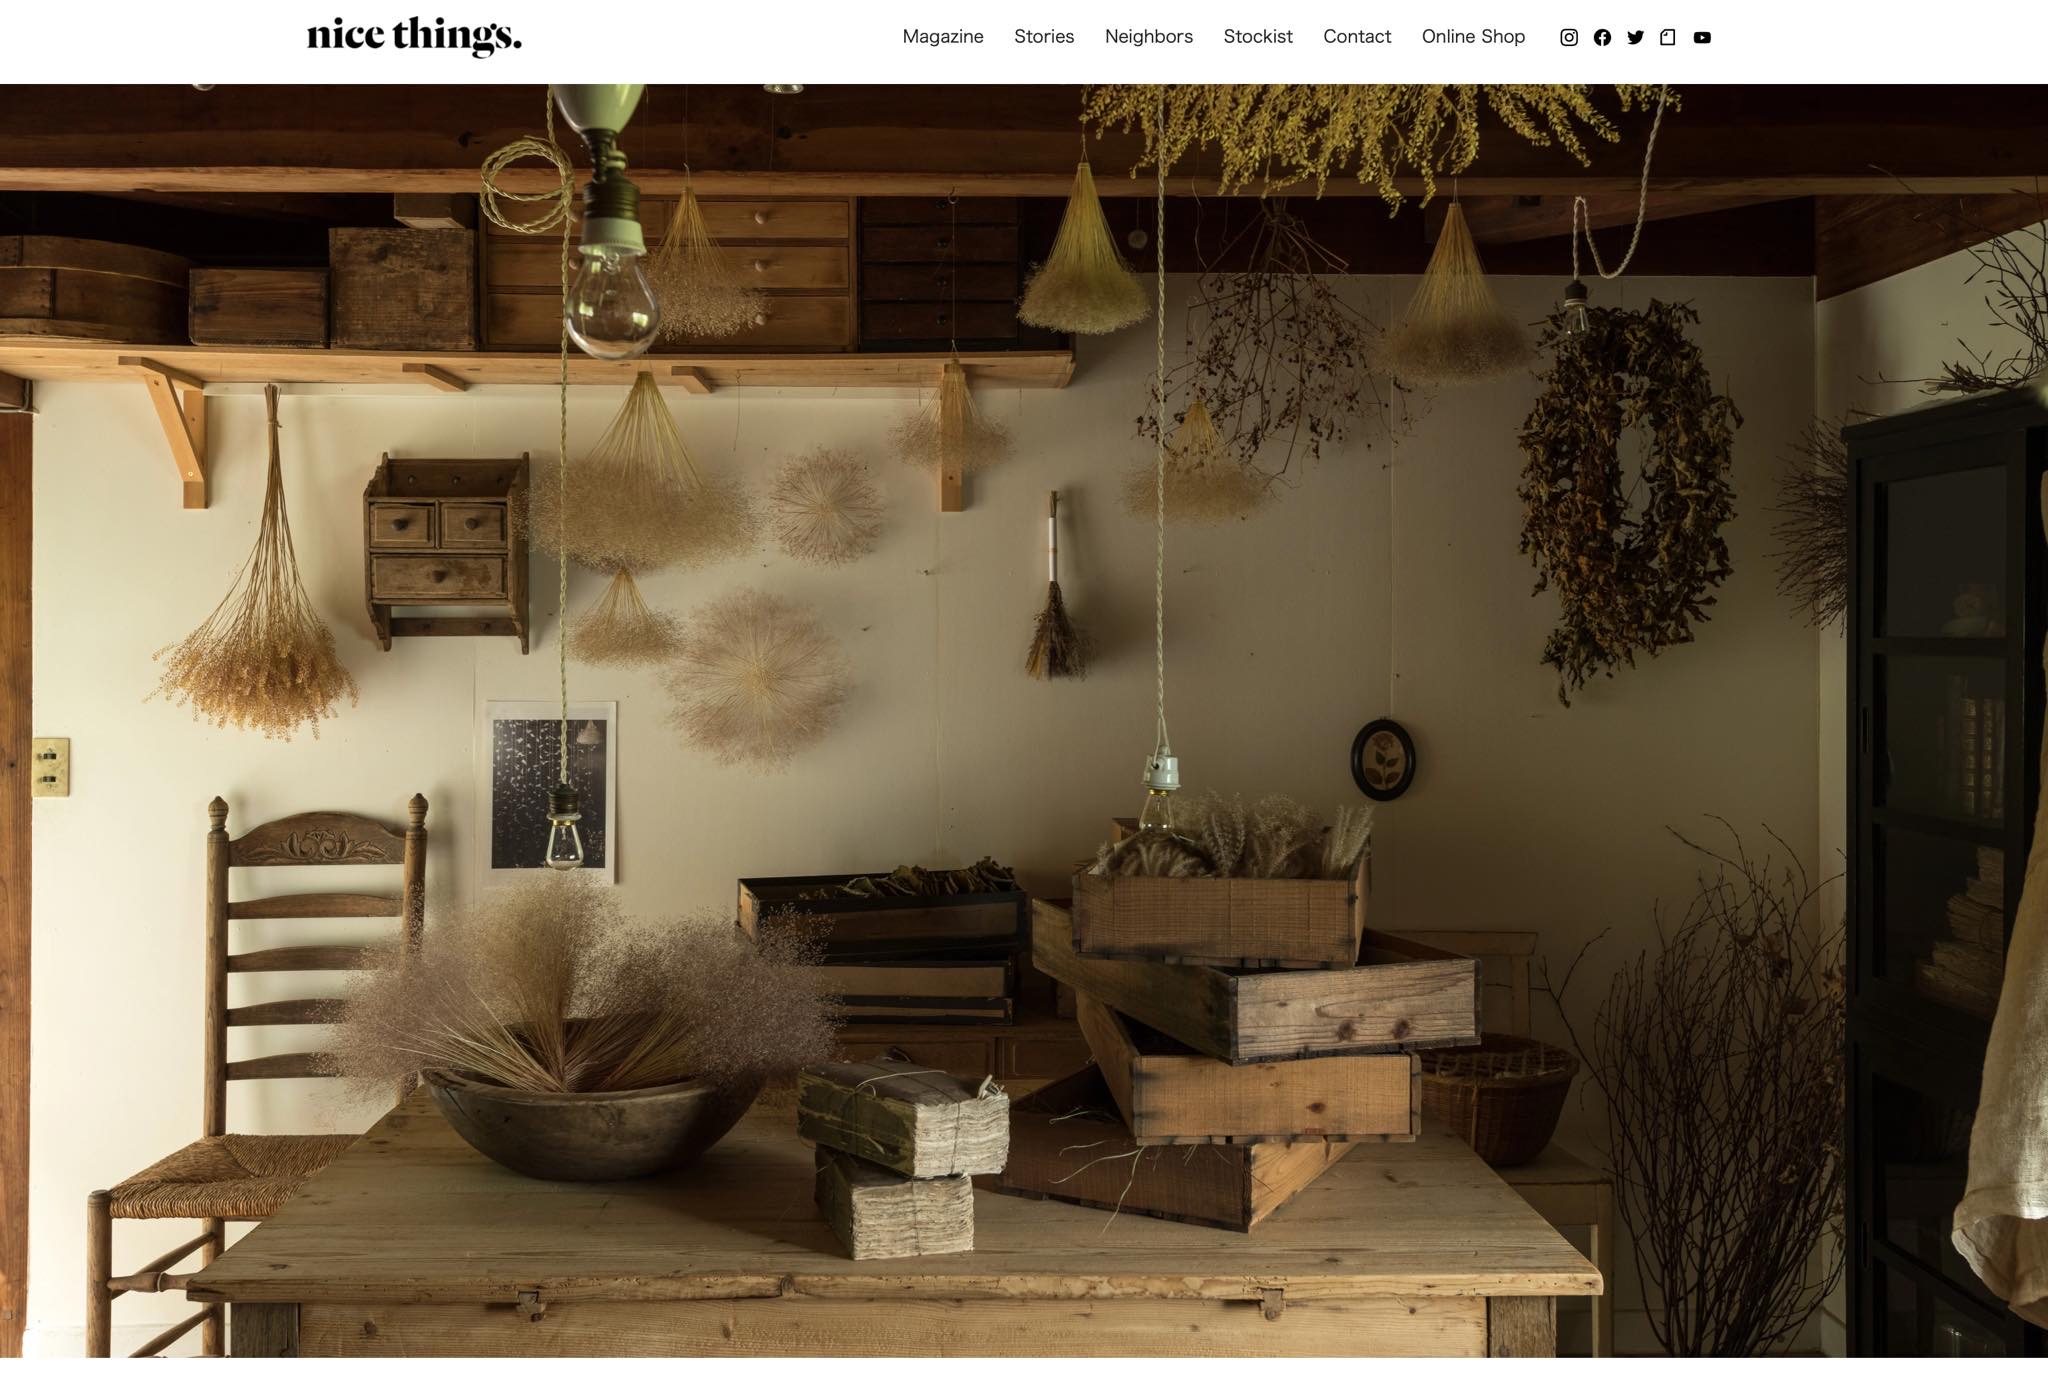 nice things.69/kikusa/mie webページトップに松原撮影の写真が使用されました。